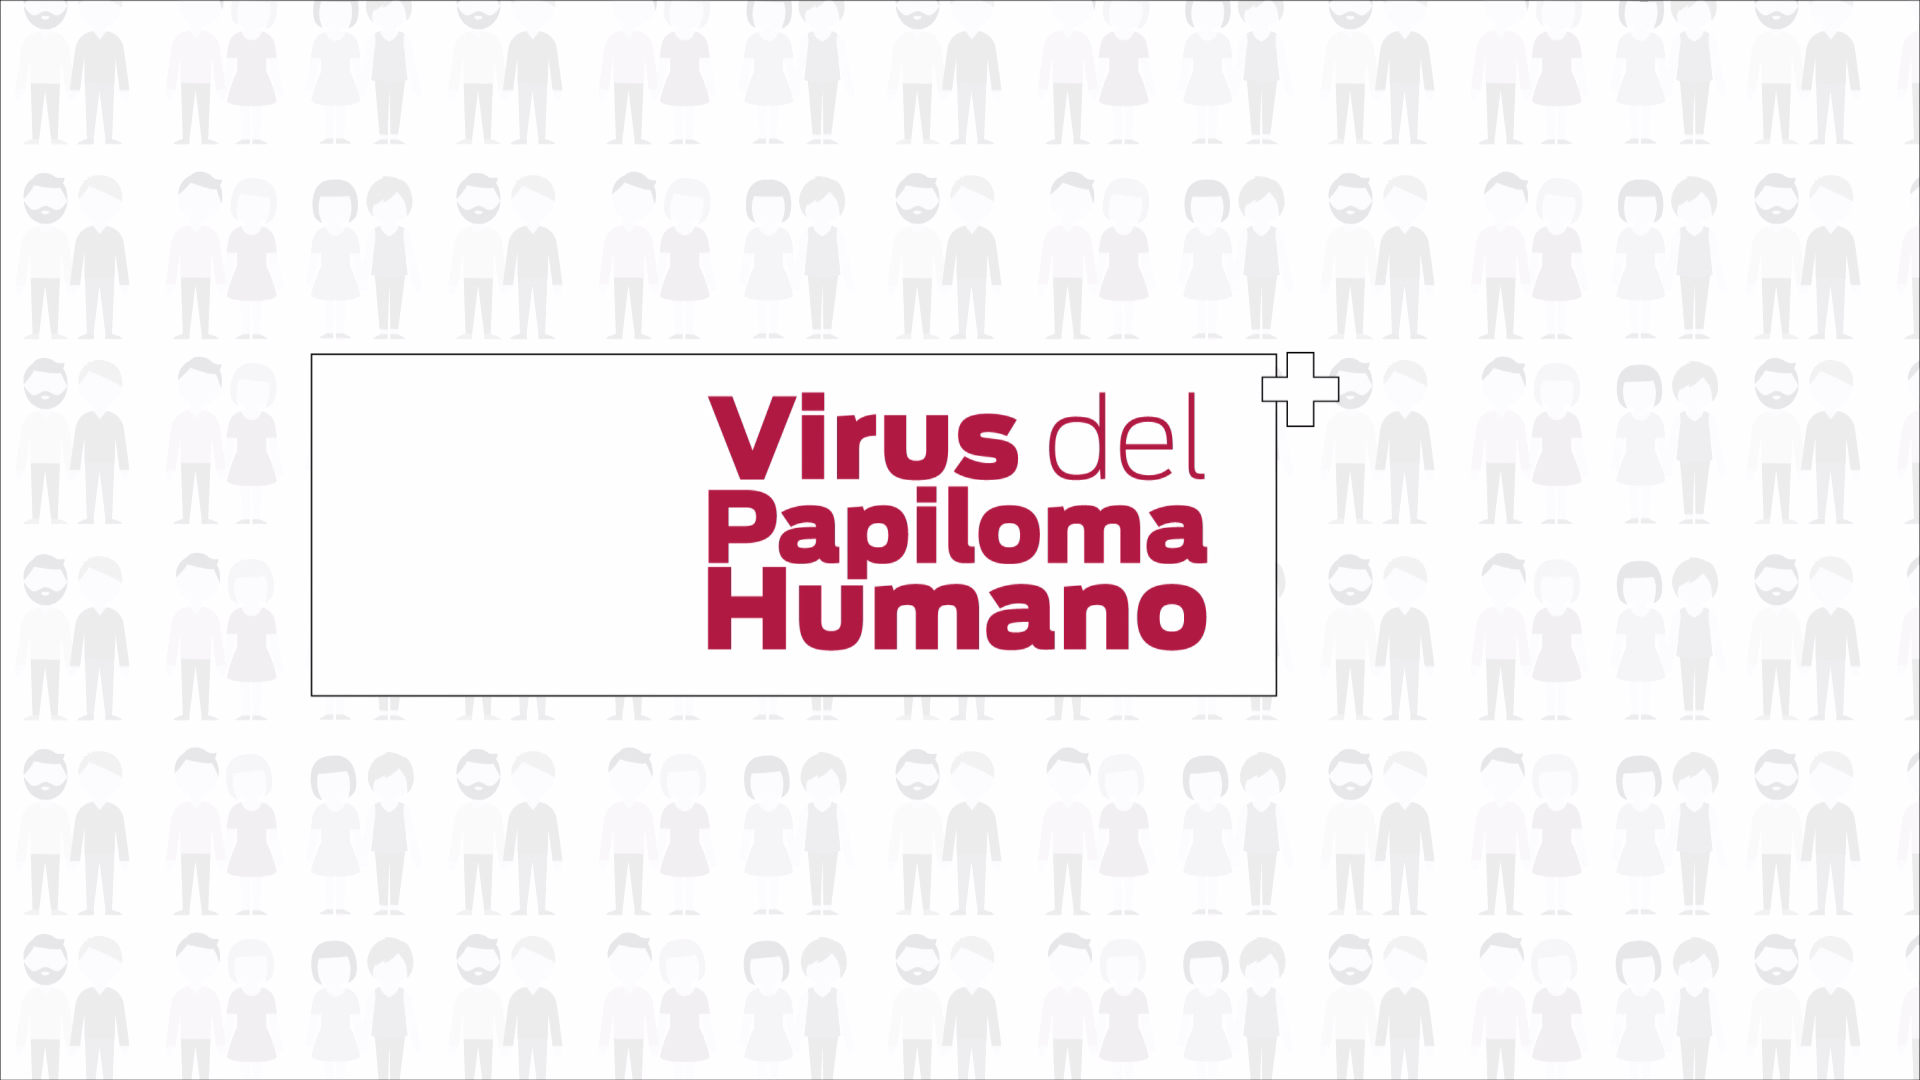 HPV - Virus del Papiloma Humano